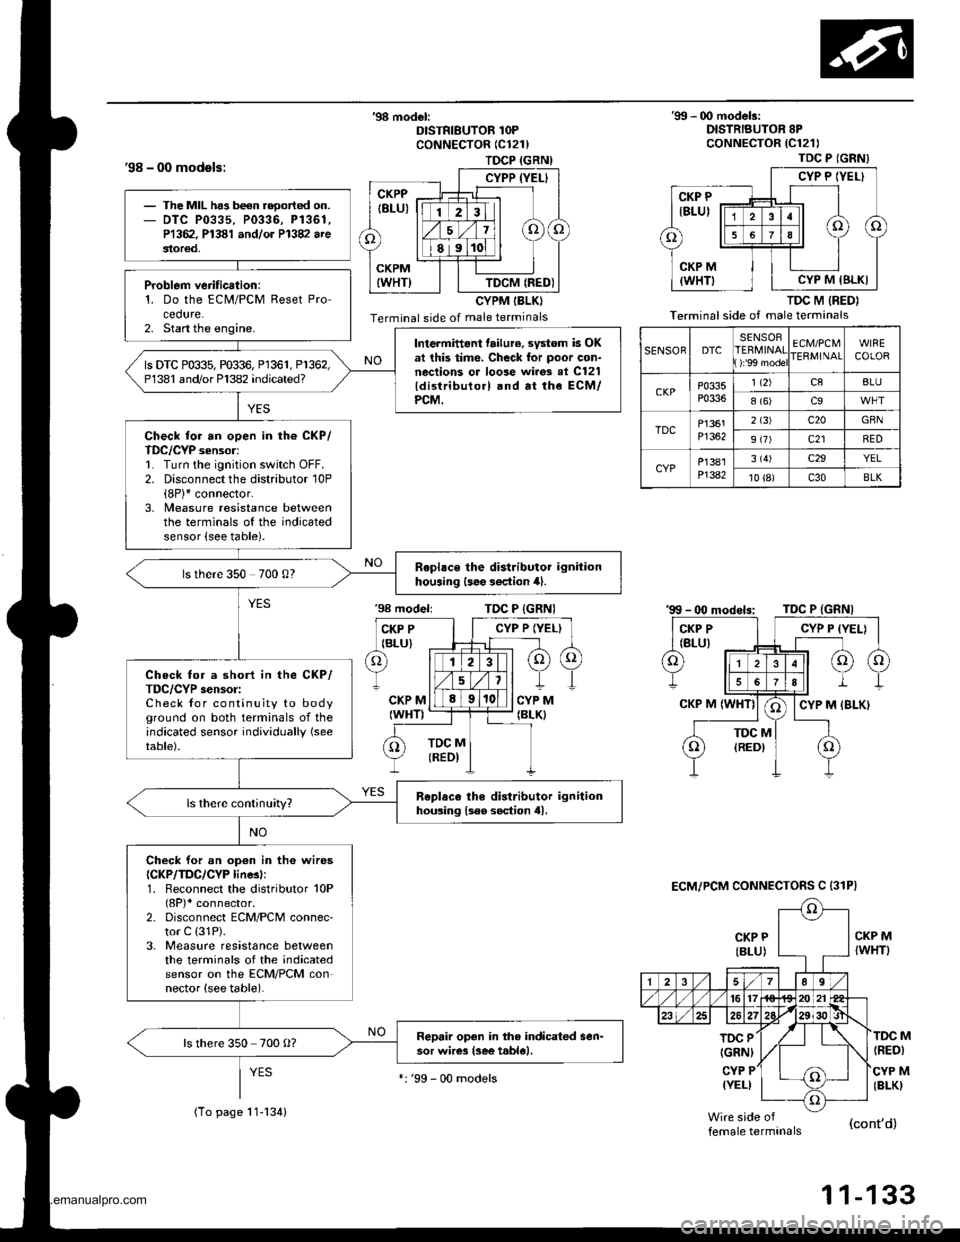 HONDA CR-V 1999 RD1-RD3 / 1.G Workshop Manual 
TDCP (GRN)
CYPP (YEL}
TDCM (REDI
98 - 00 models:
98 model:DISTRIBUTOR 1OPCoNNECTOR (C121)
CYPM IBLKI
Terminal side of male terminals
99 - 00 modelr:DISTRIBUTOR 8PcoNNECTOR {C121)
TDC M (RED}
Termi